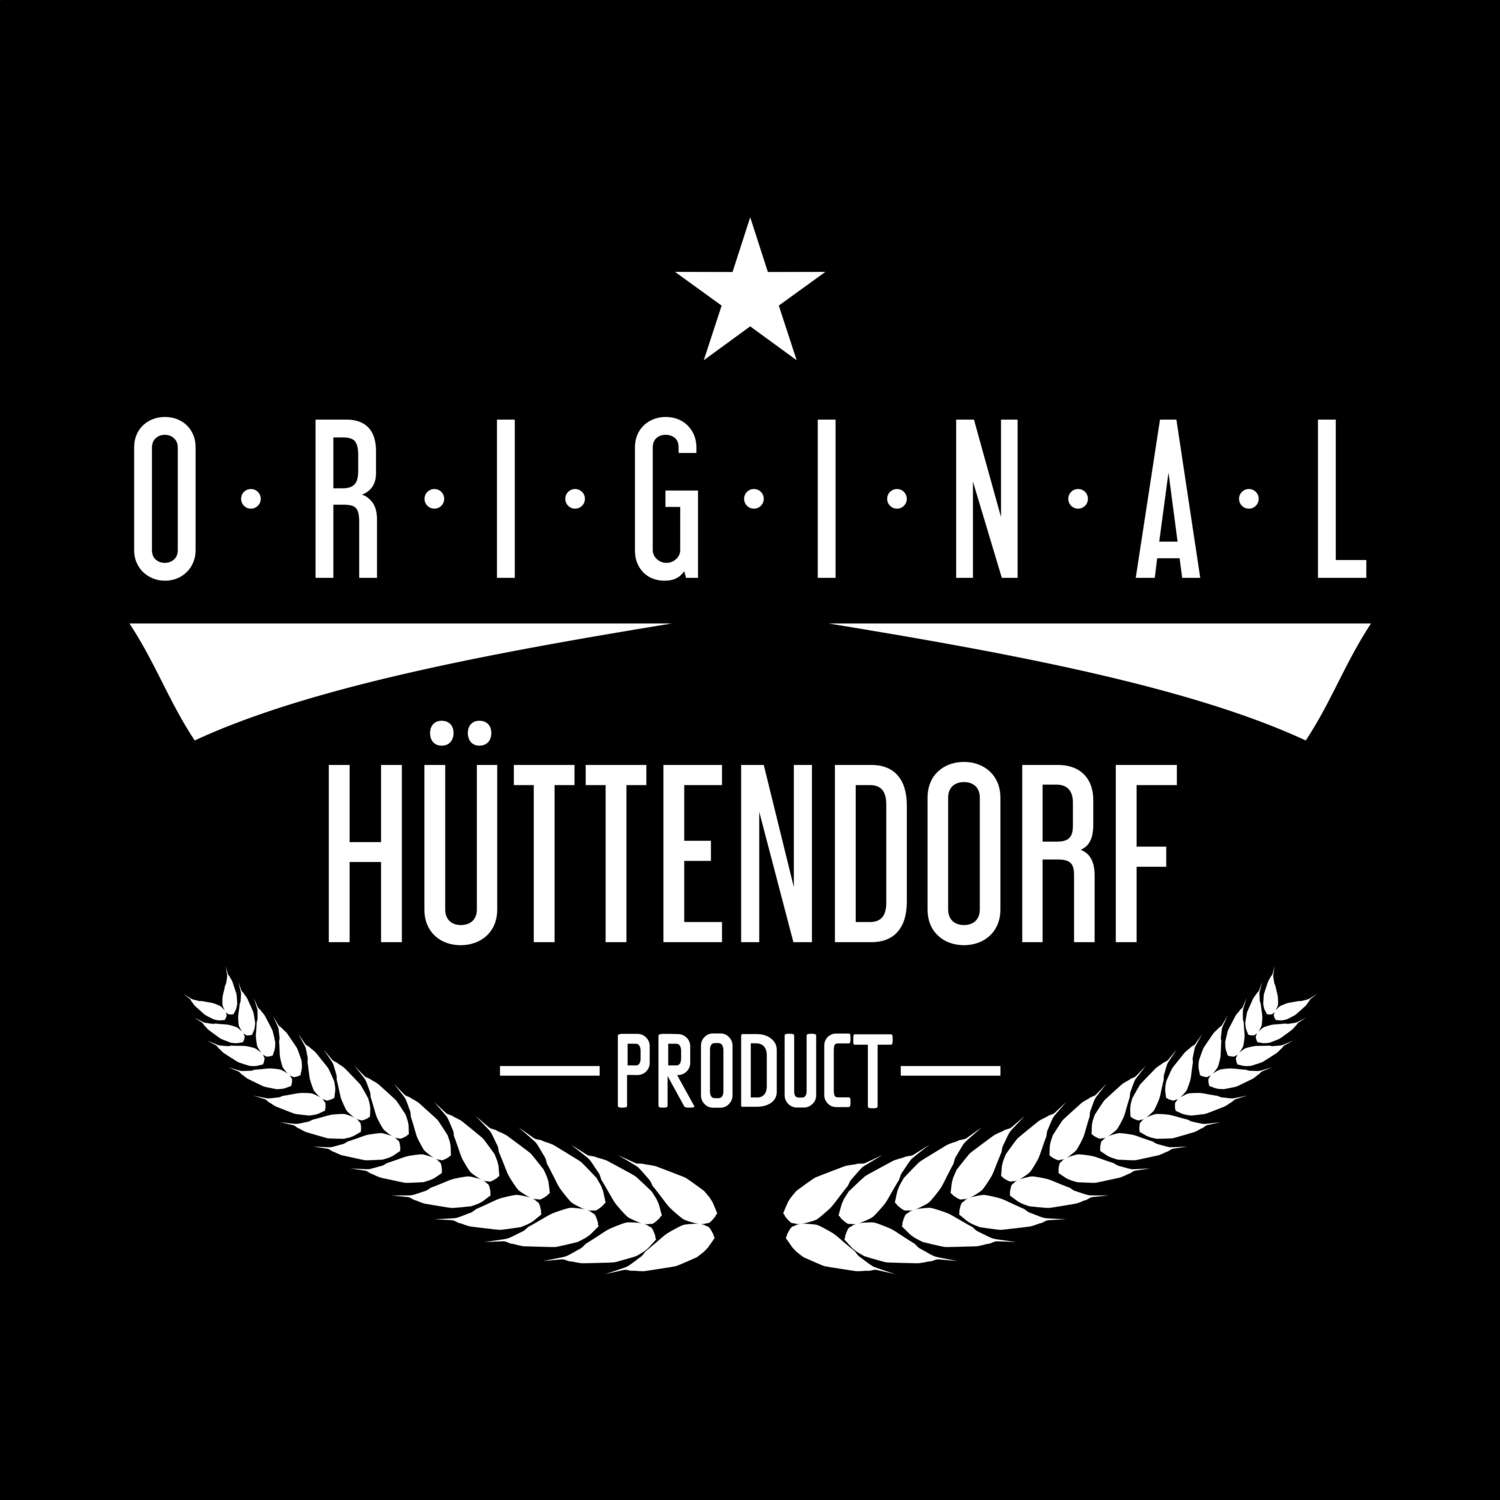 Hüttendorf T-Shirt »Original Product«